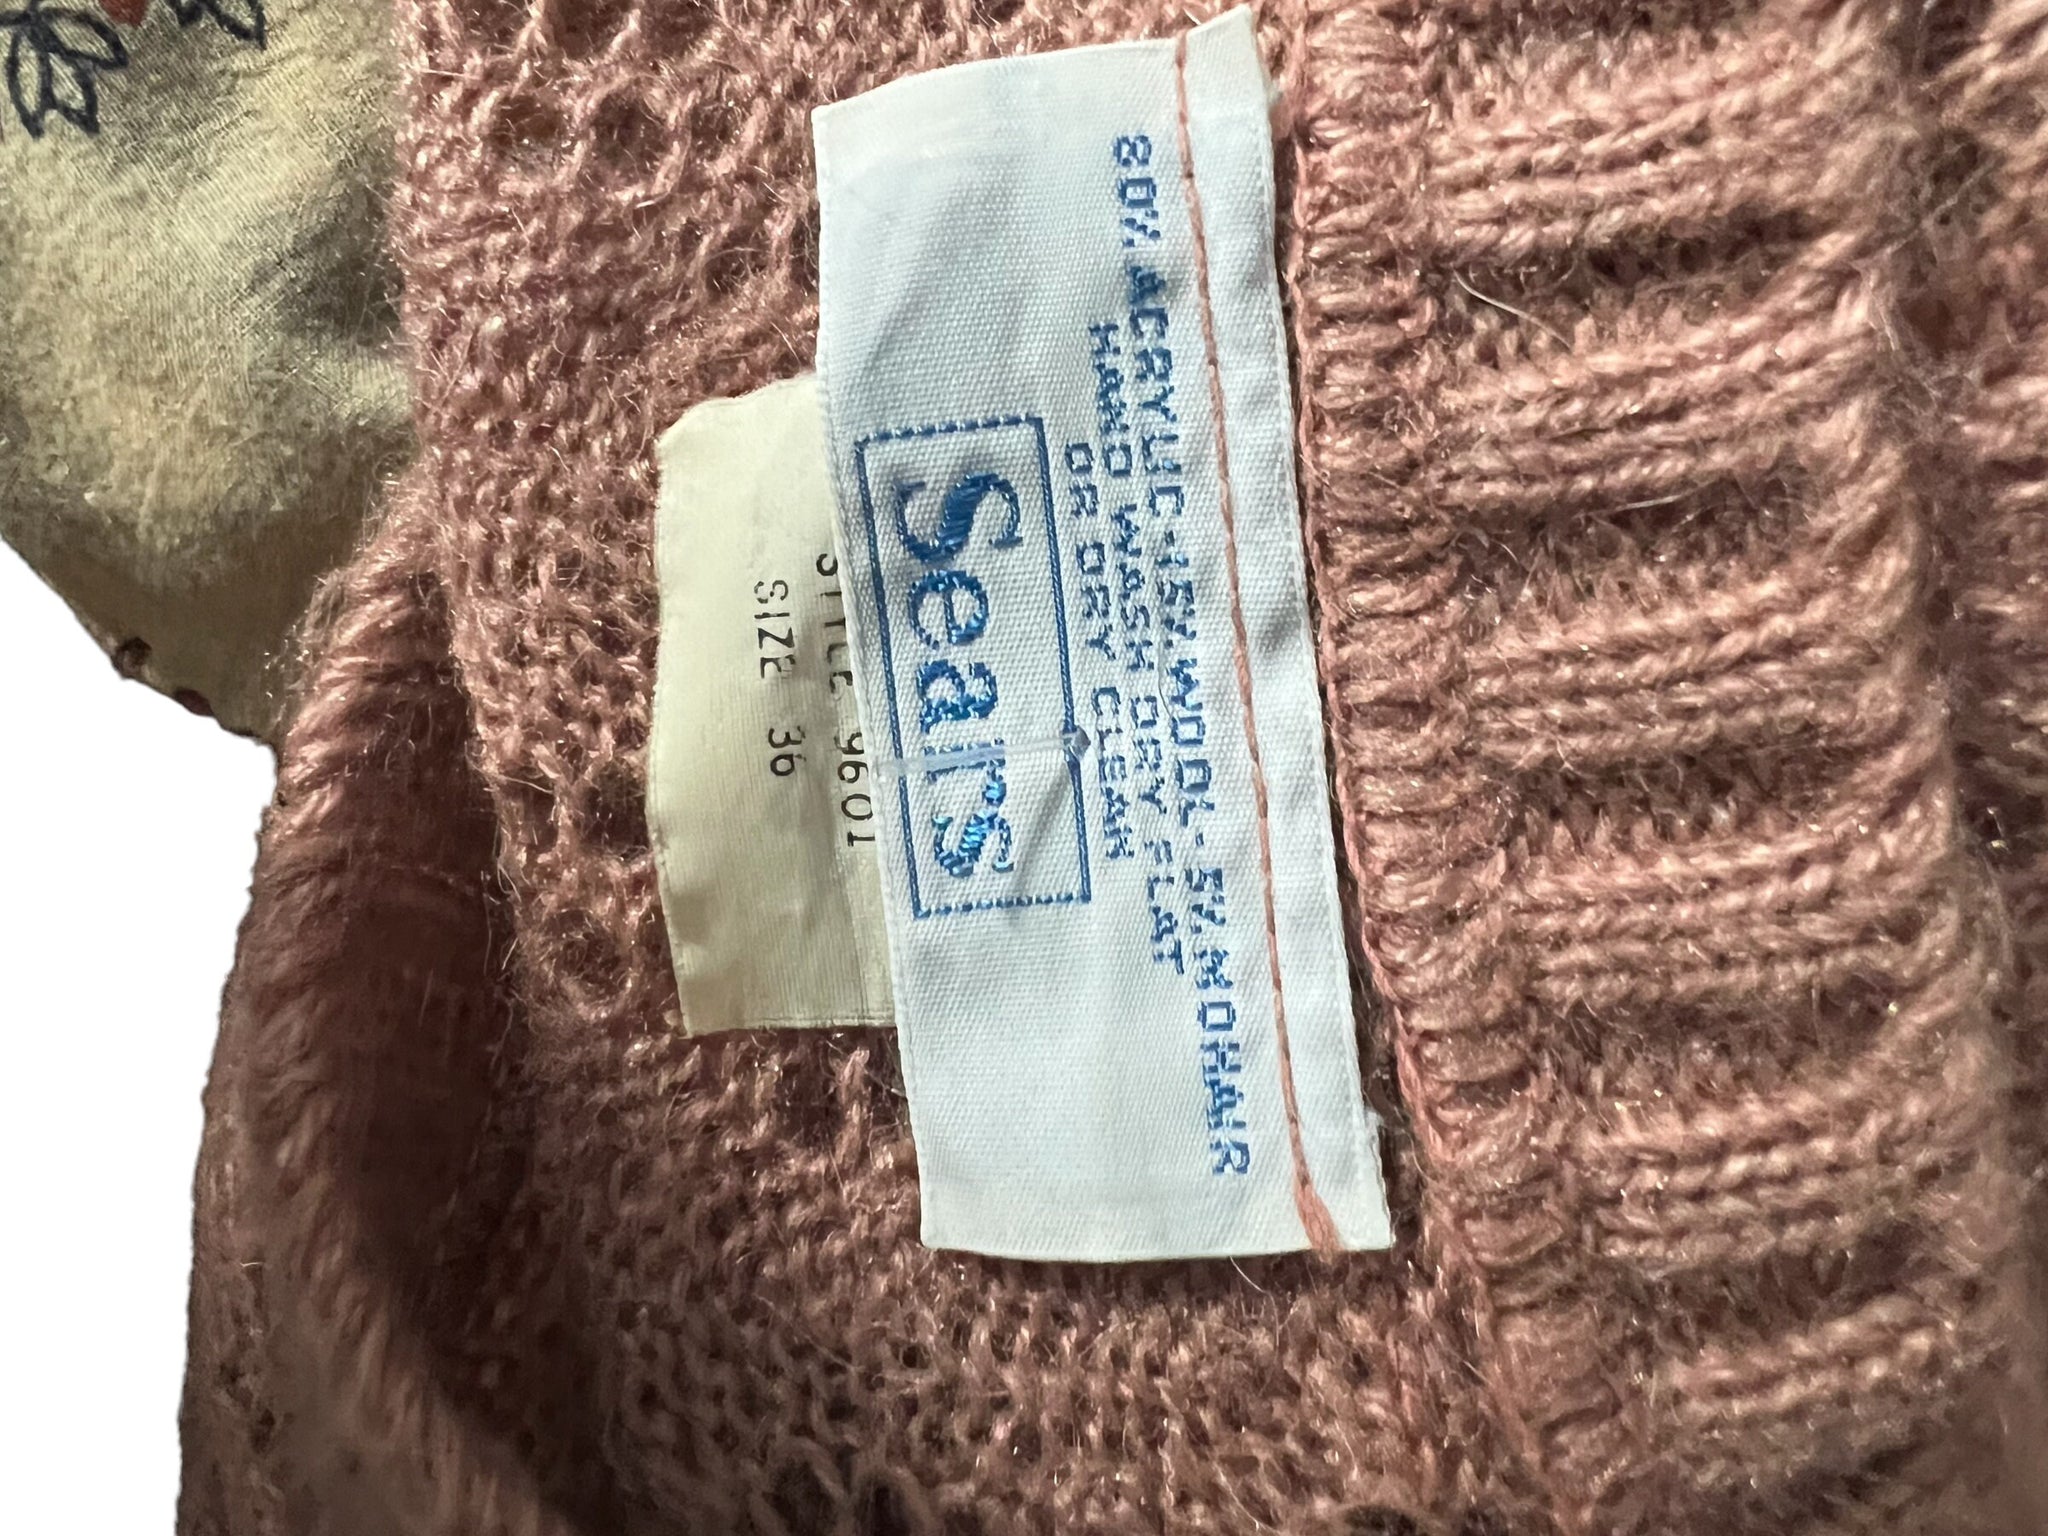 Vintage 70's pink sweater vest top M Sears